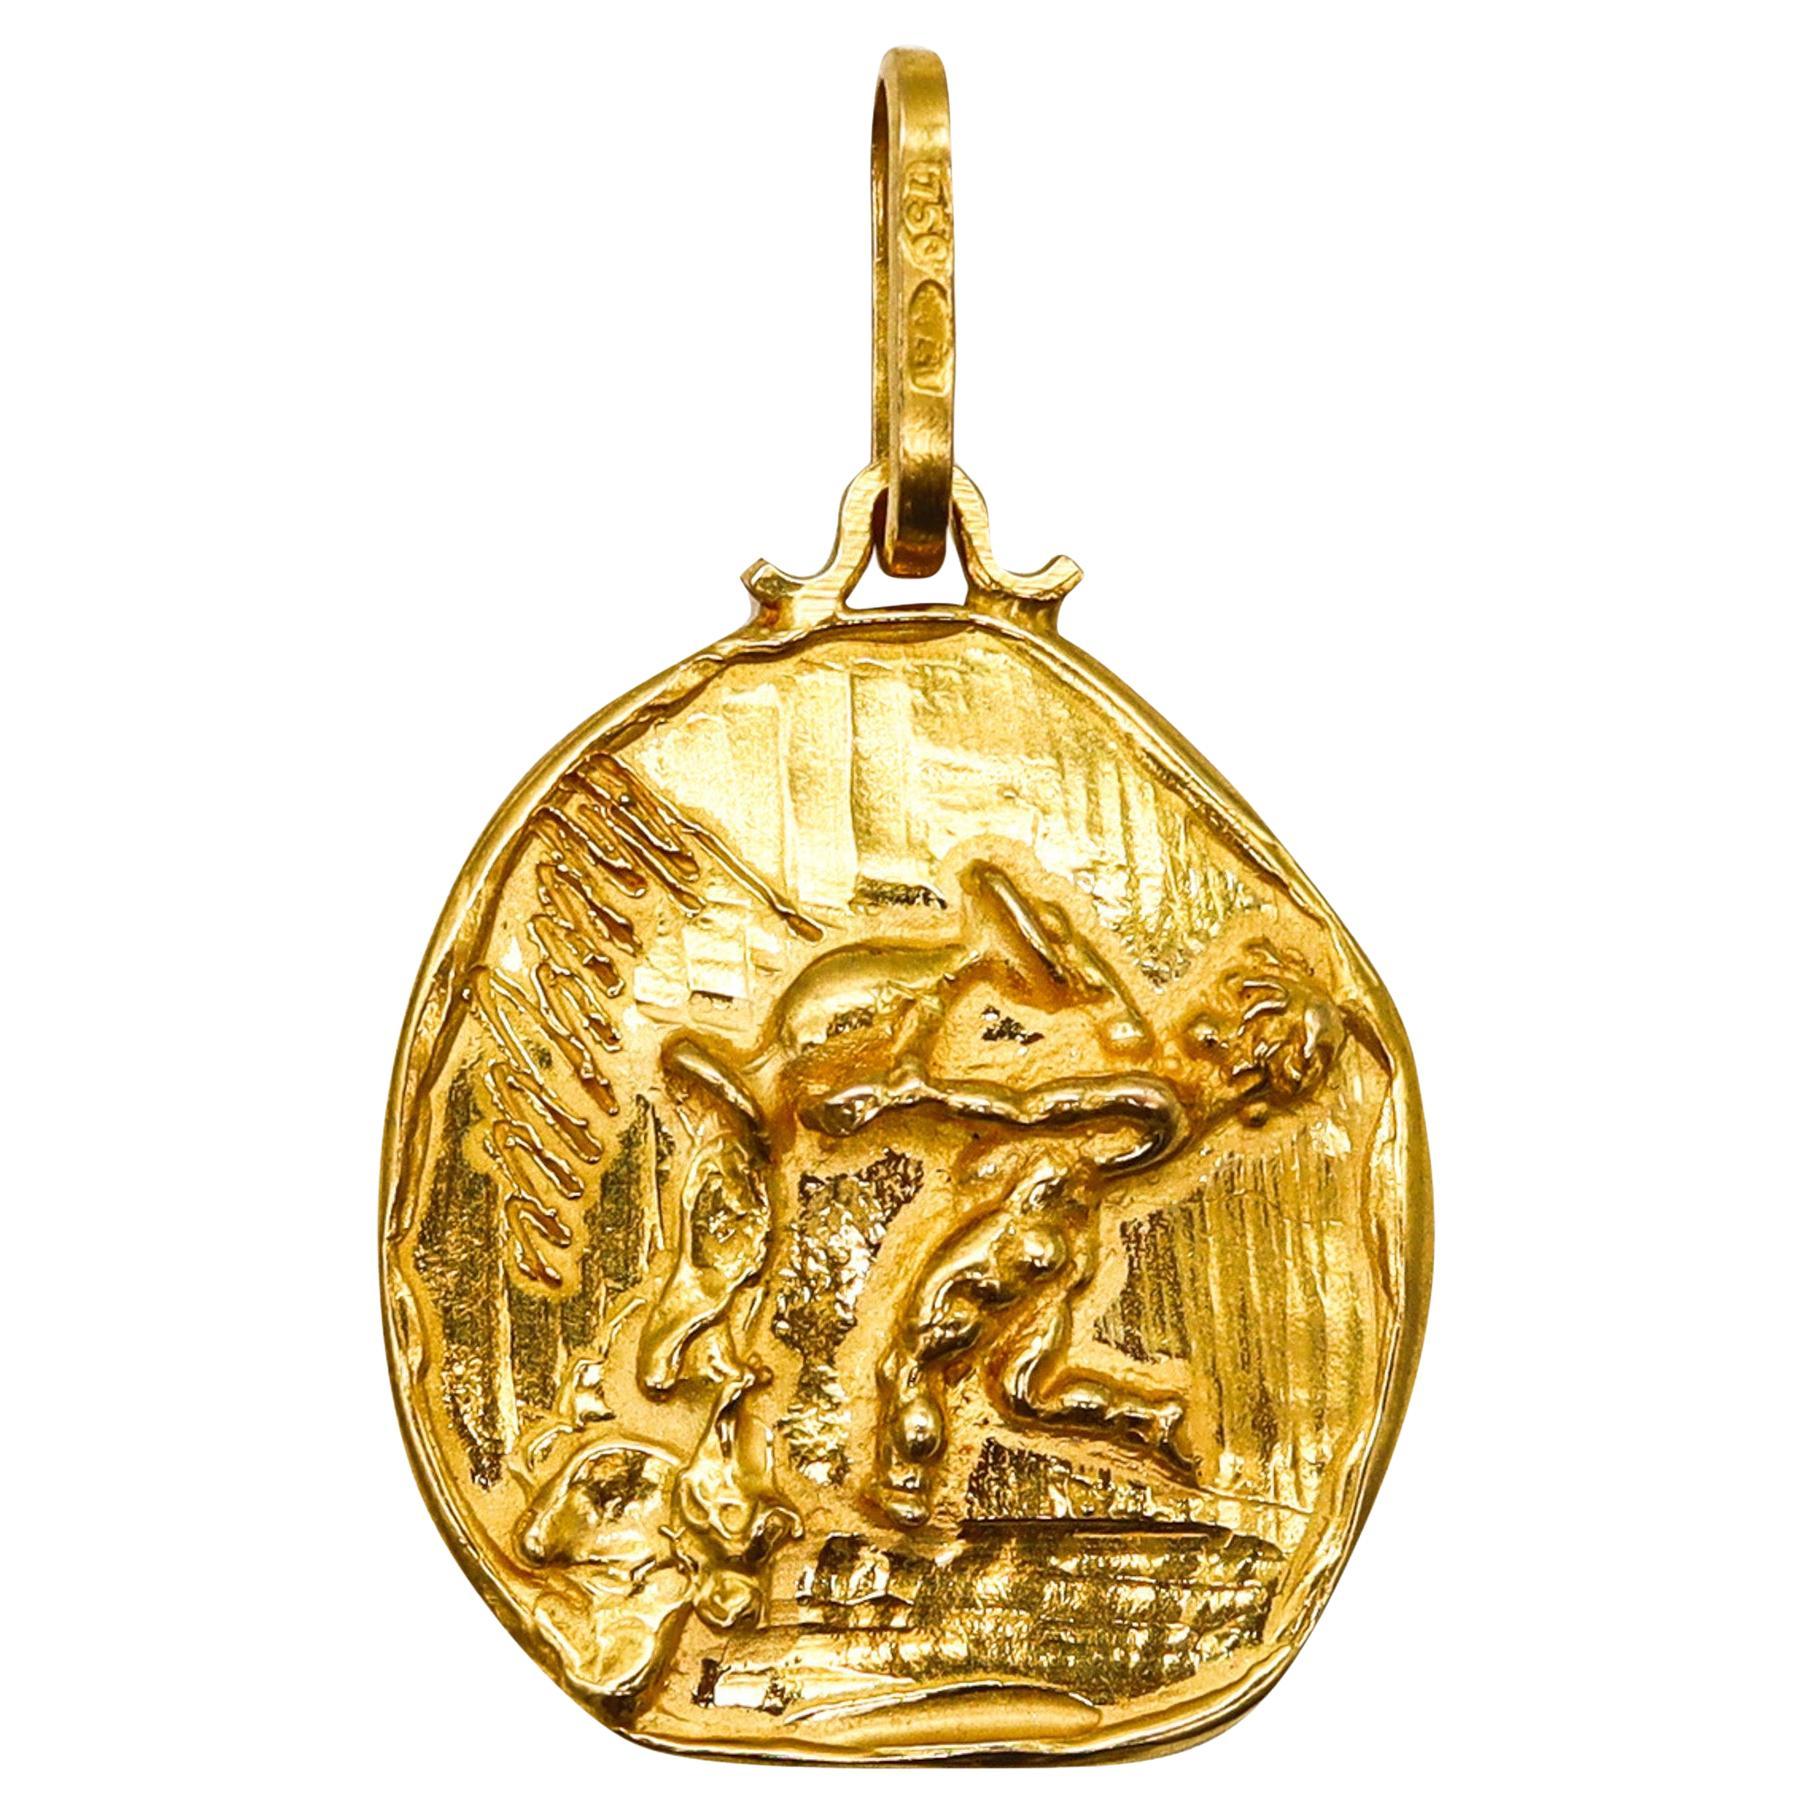 Germano Nino D'Antonio 1970 Renaissance Revival Medallion In 18Kt Yellow Gold